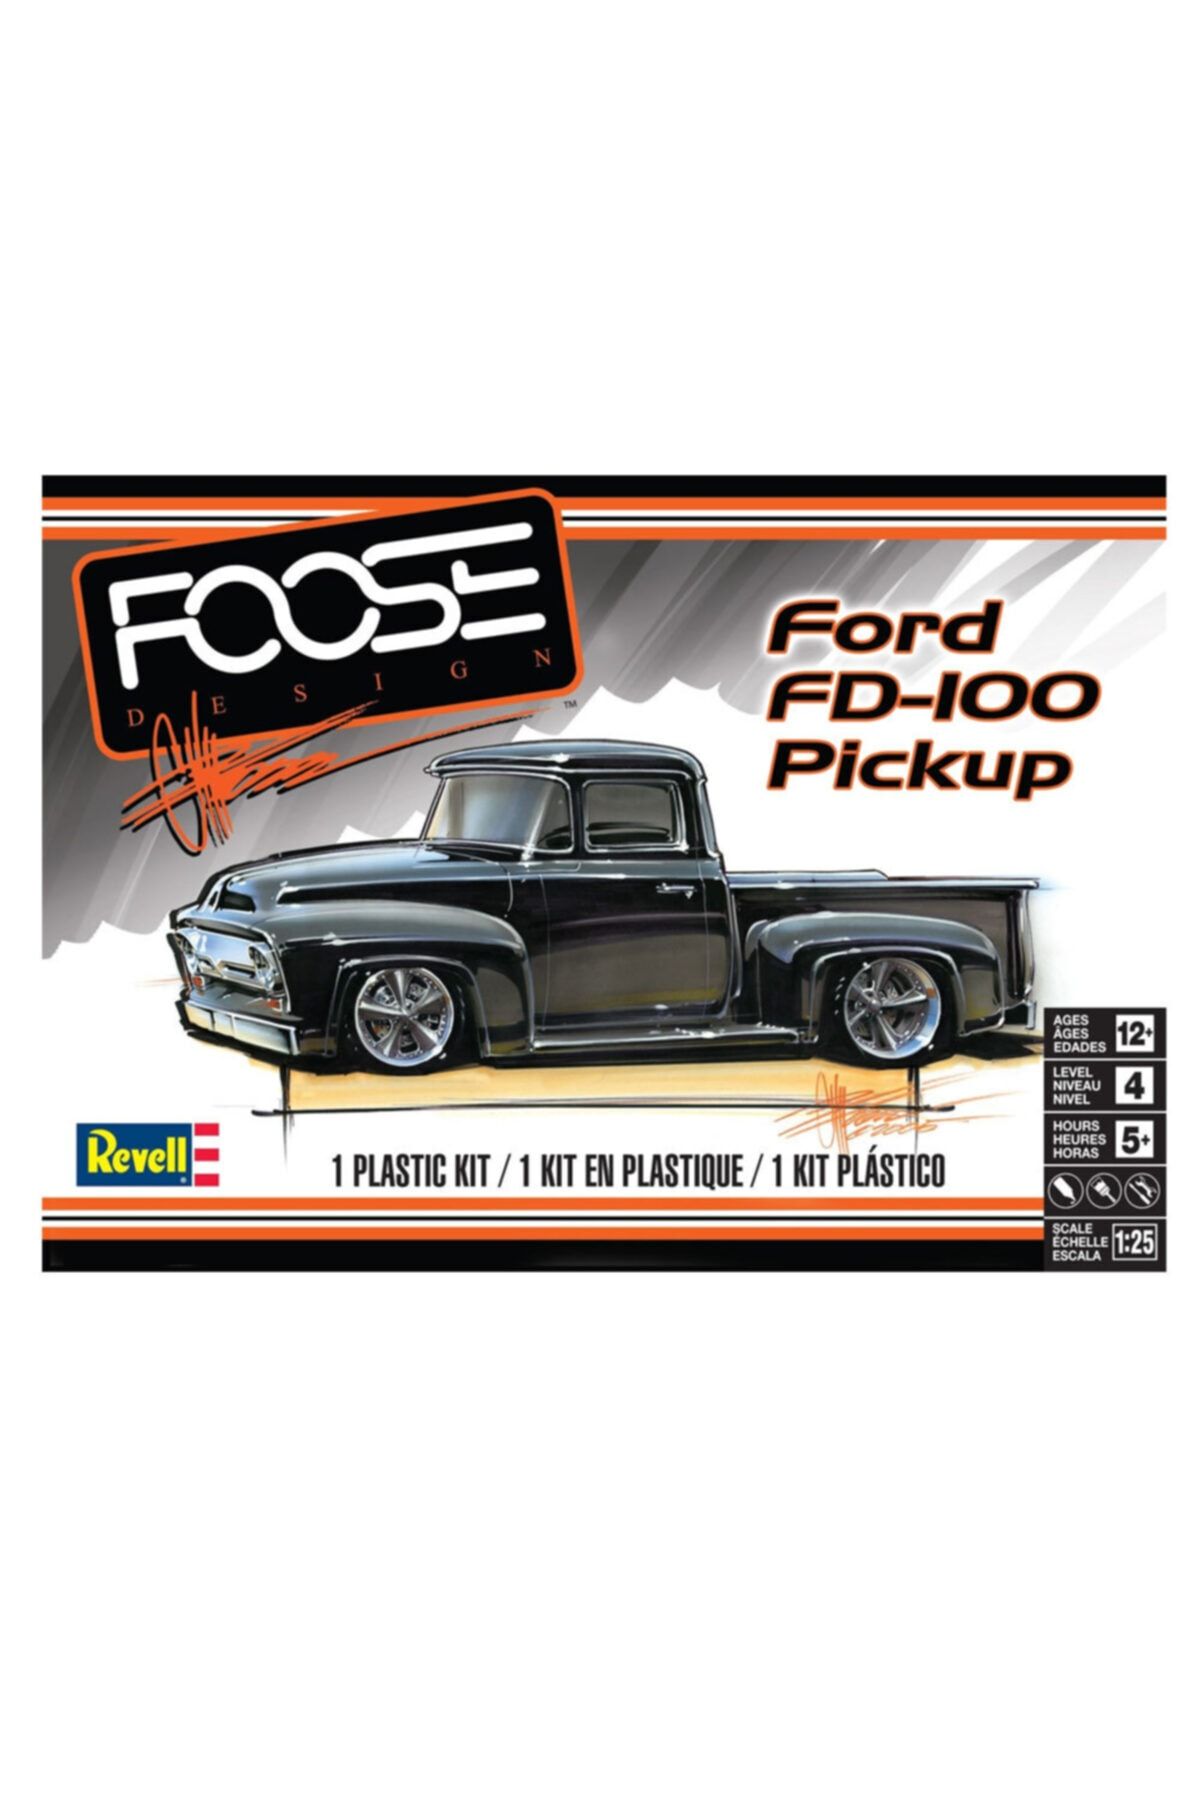 REVELL Maket Foose Ford Fd-100 Pickup Vsa14426